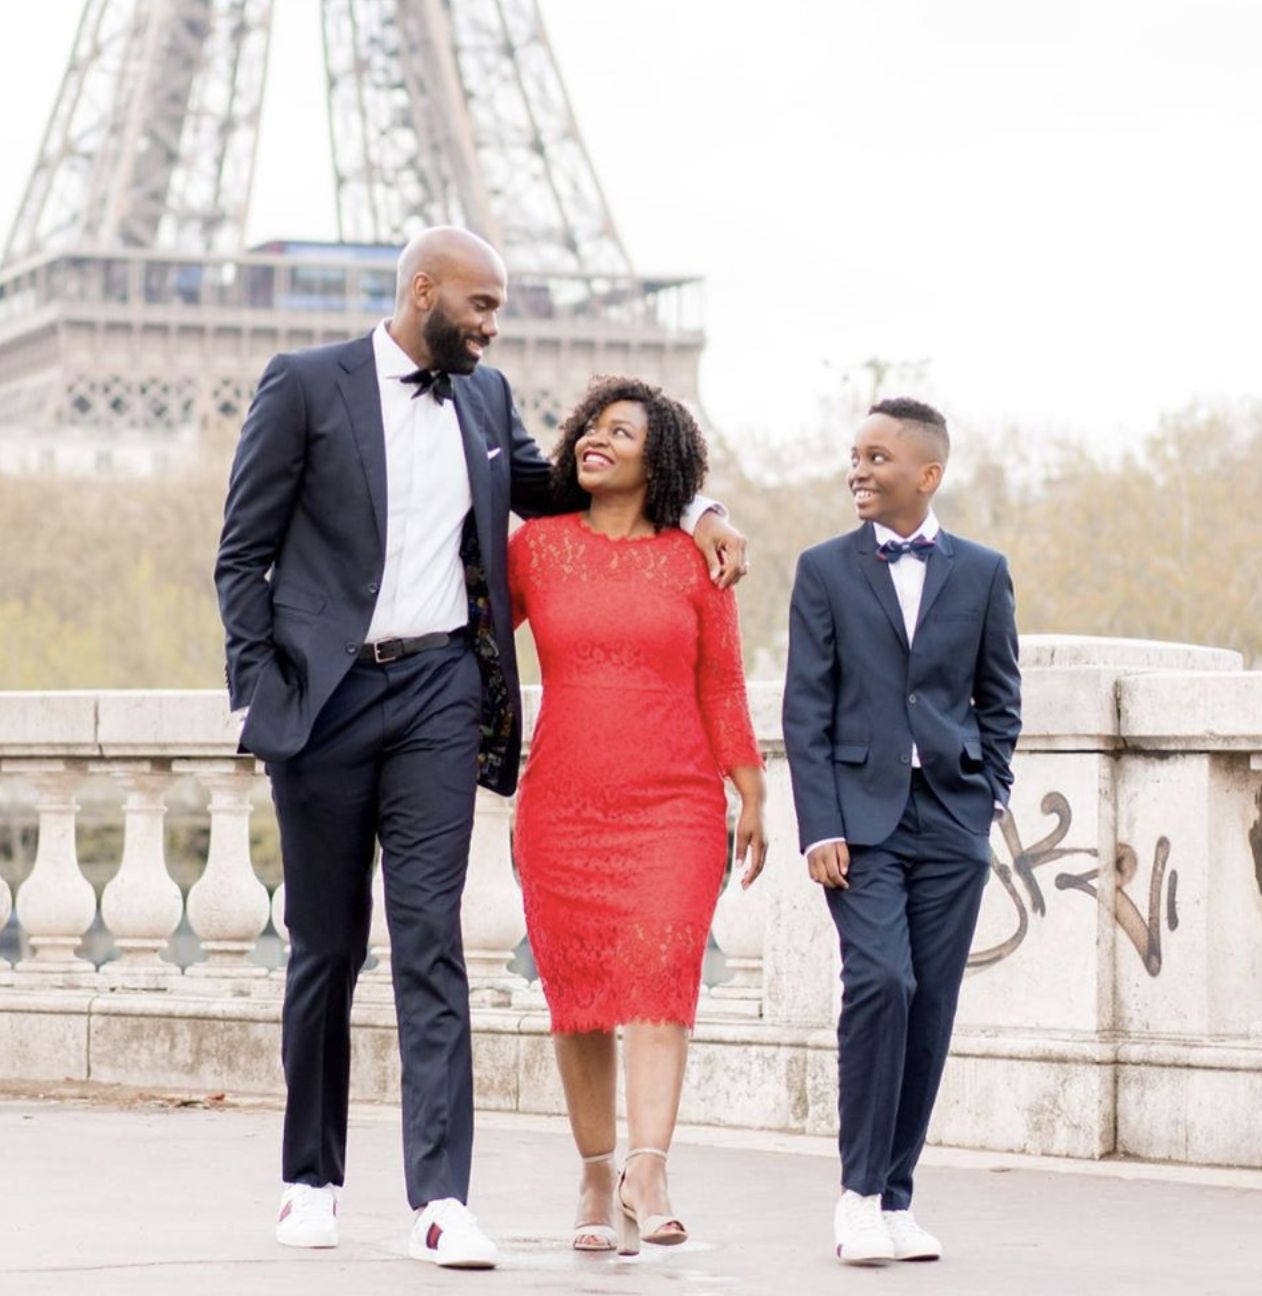 Black Love Goals: 'We Travel To Nurture Our Relationship'